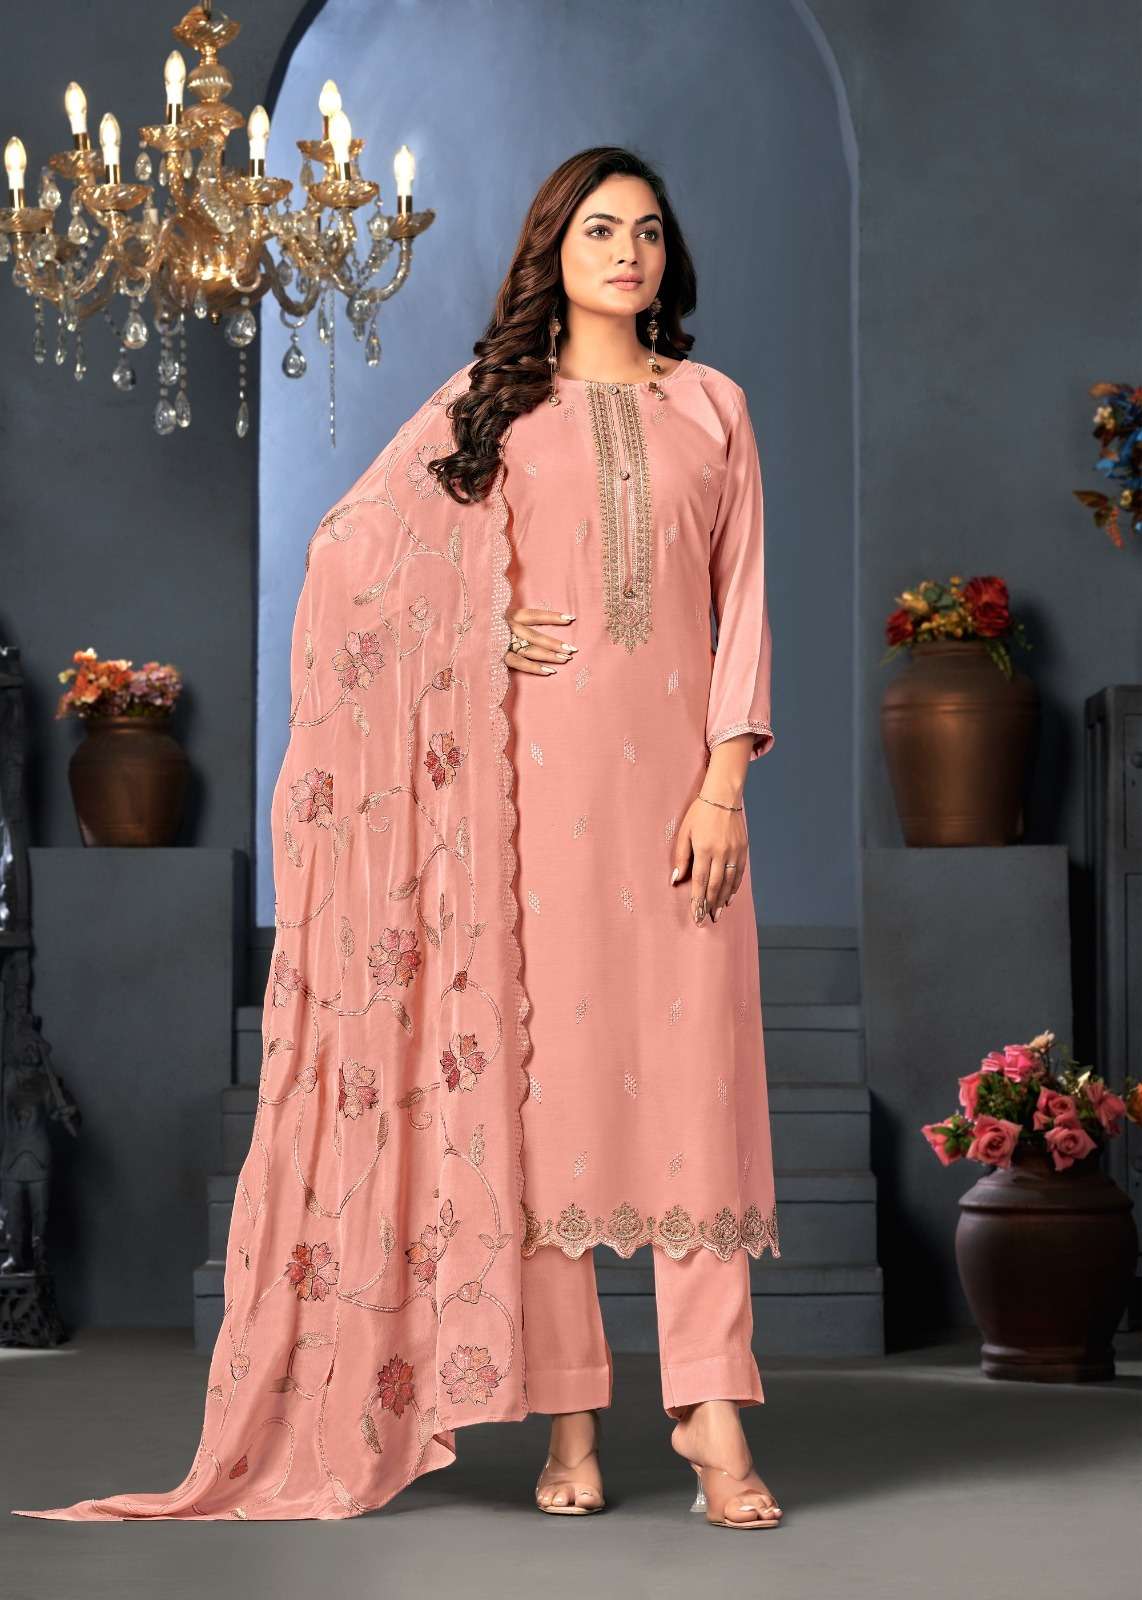 bela fashion nawaazish vol-2 3879-3885 series stylish designer salwar kameez catalogue collection 2023